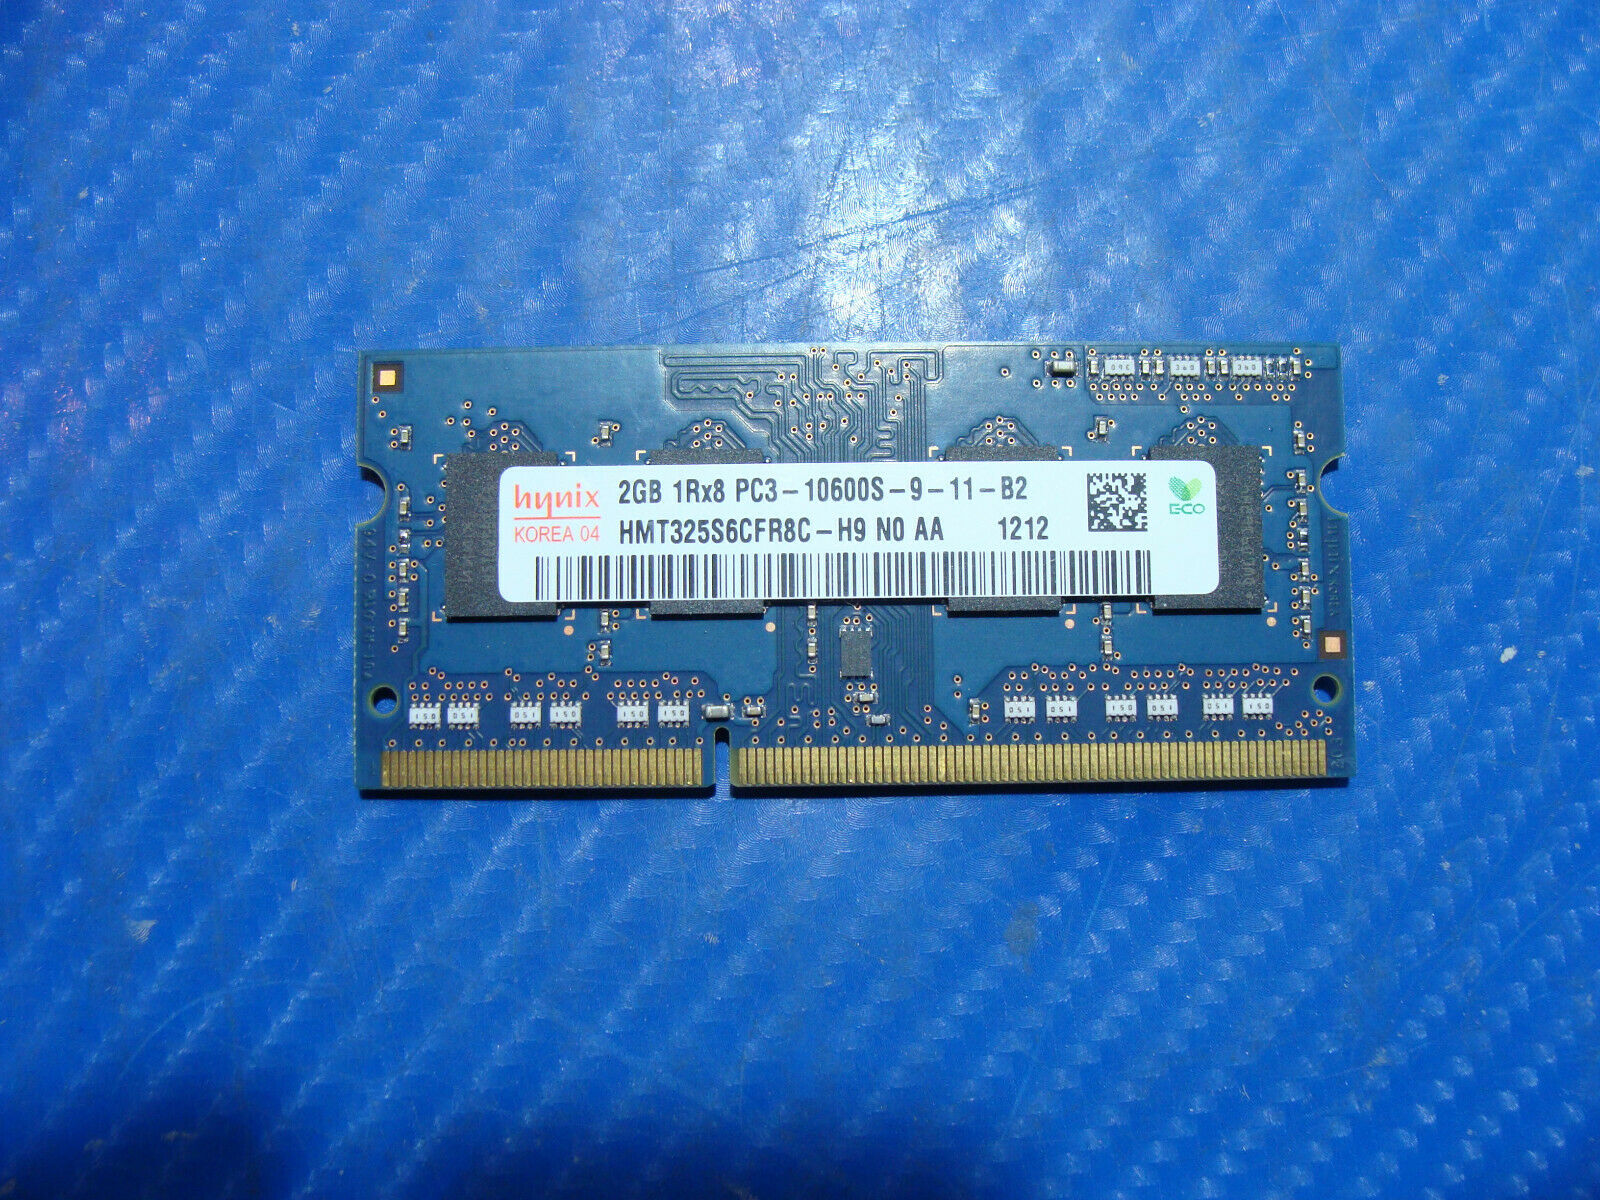 MacBook A1286 Laptop Hynix 2GB Memory RAM PC3-10600S-9-11-B2 HMT325S6CFR8C-H9 #1 Apple